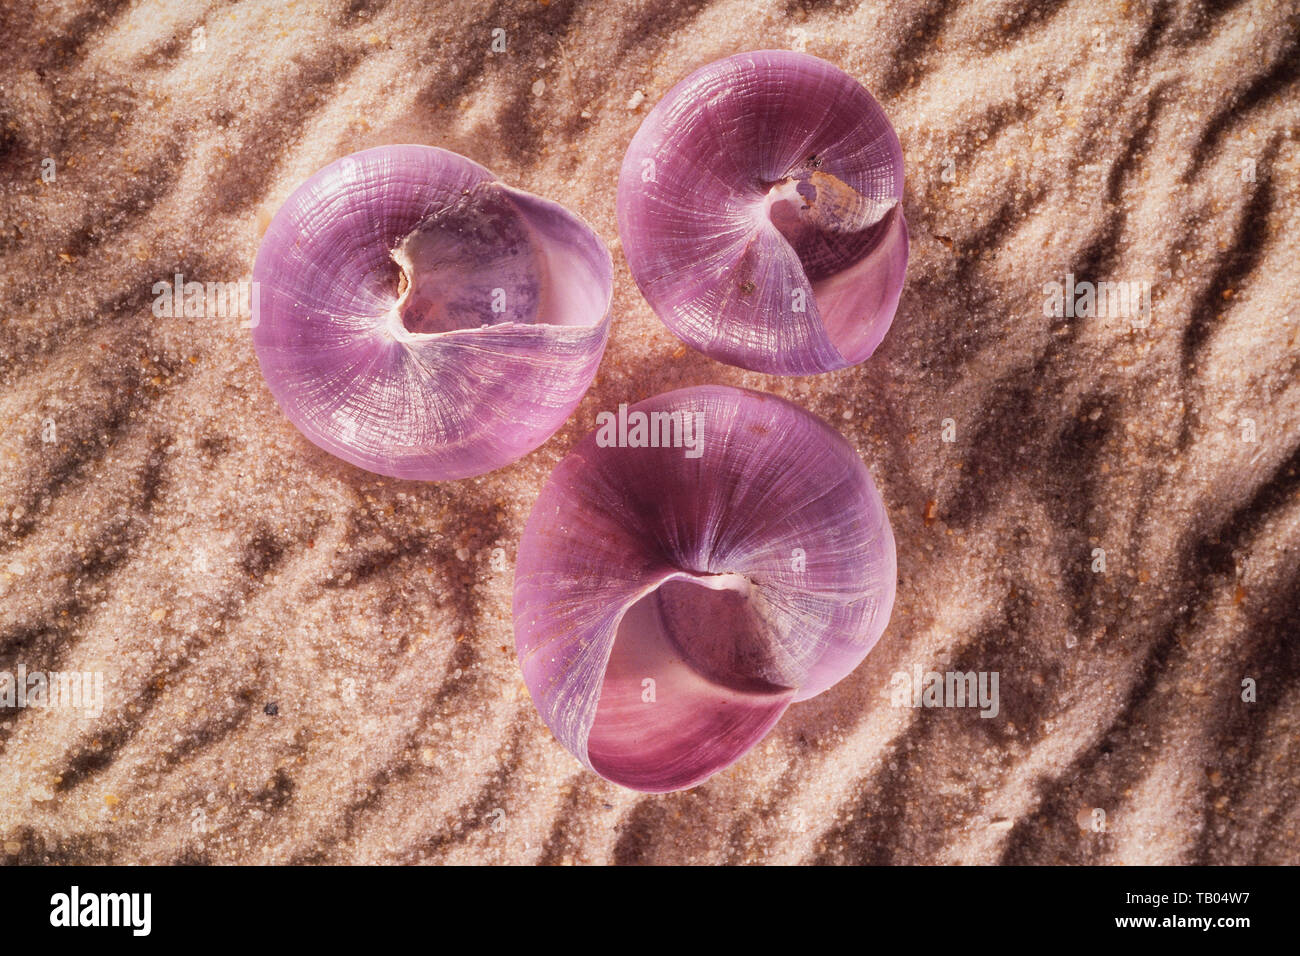 Gemeinsame lila Seeschnecke, Janthina janthina Linnaeus, auf rippled Sand Stockfoto